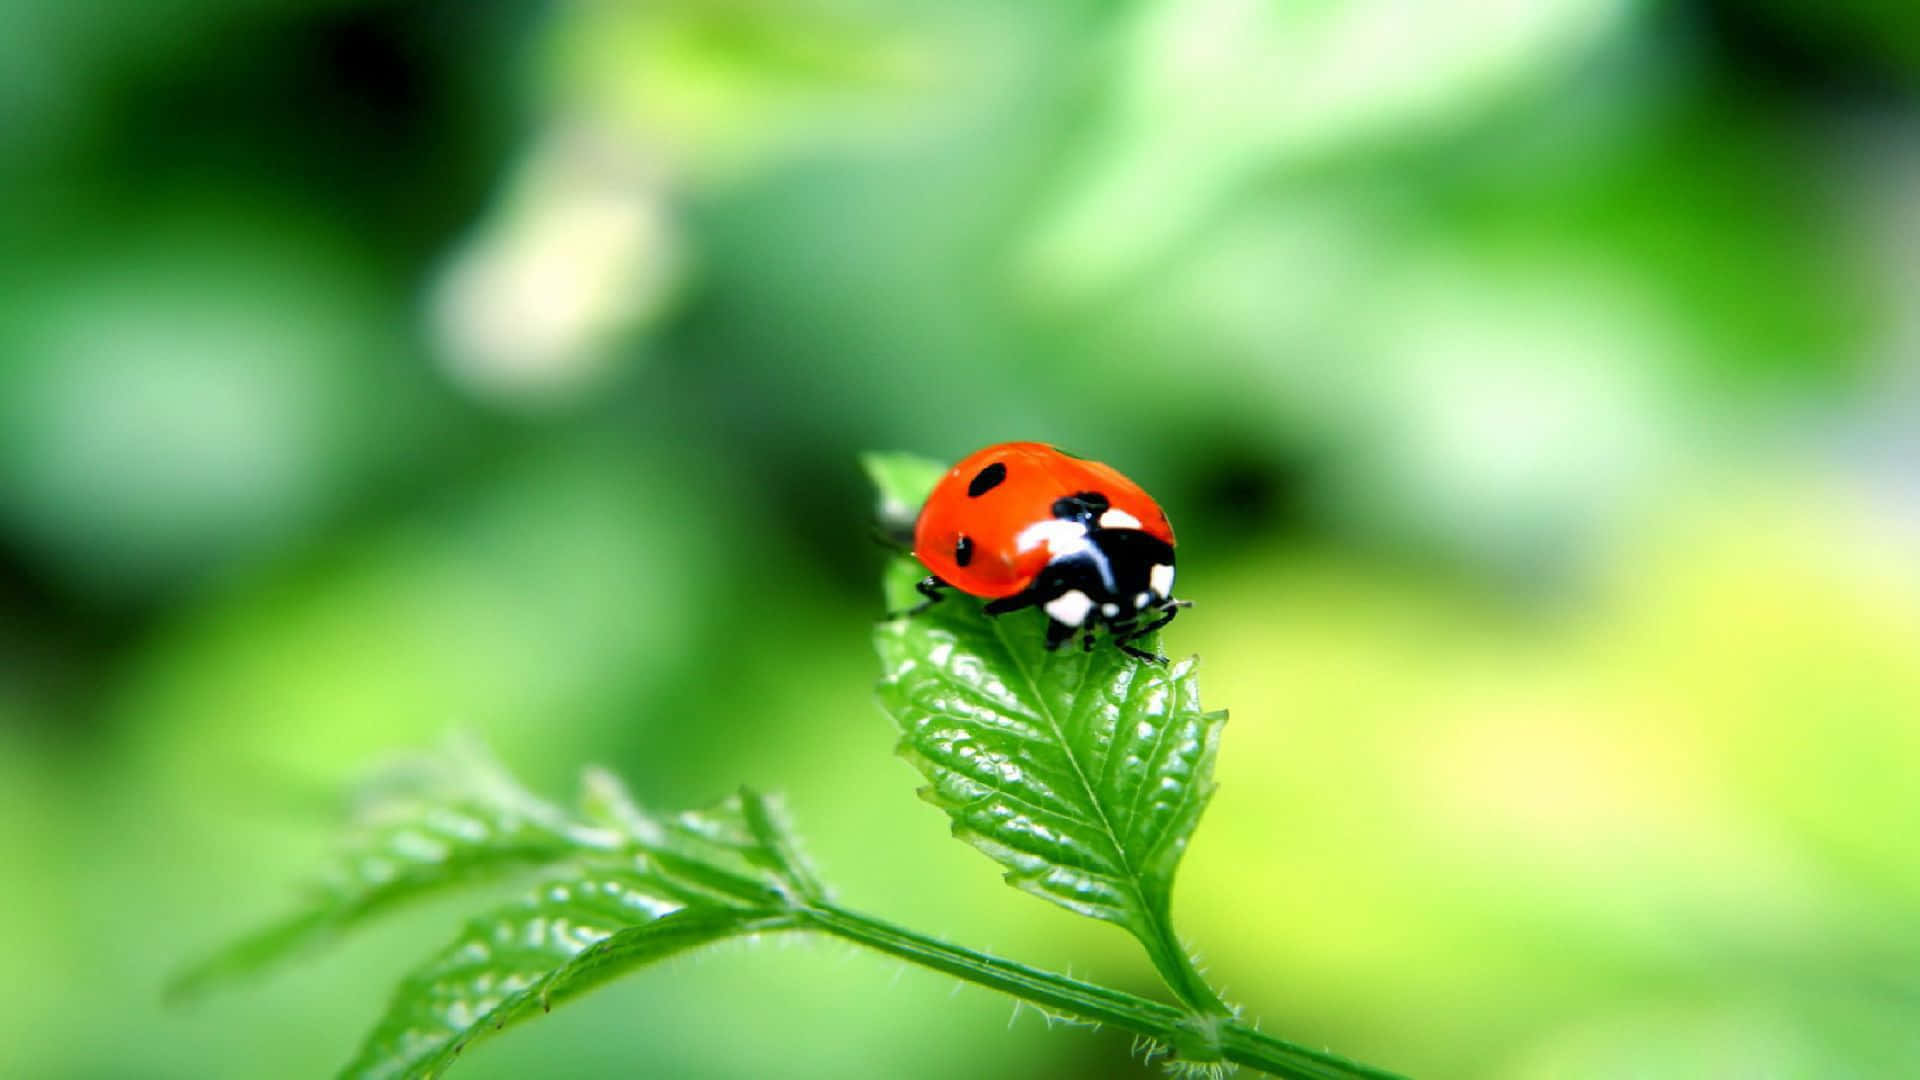 A Ladybug Making Its Way Across a Petal